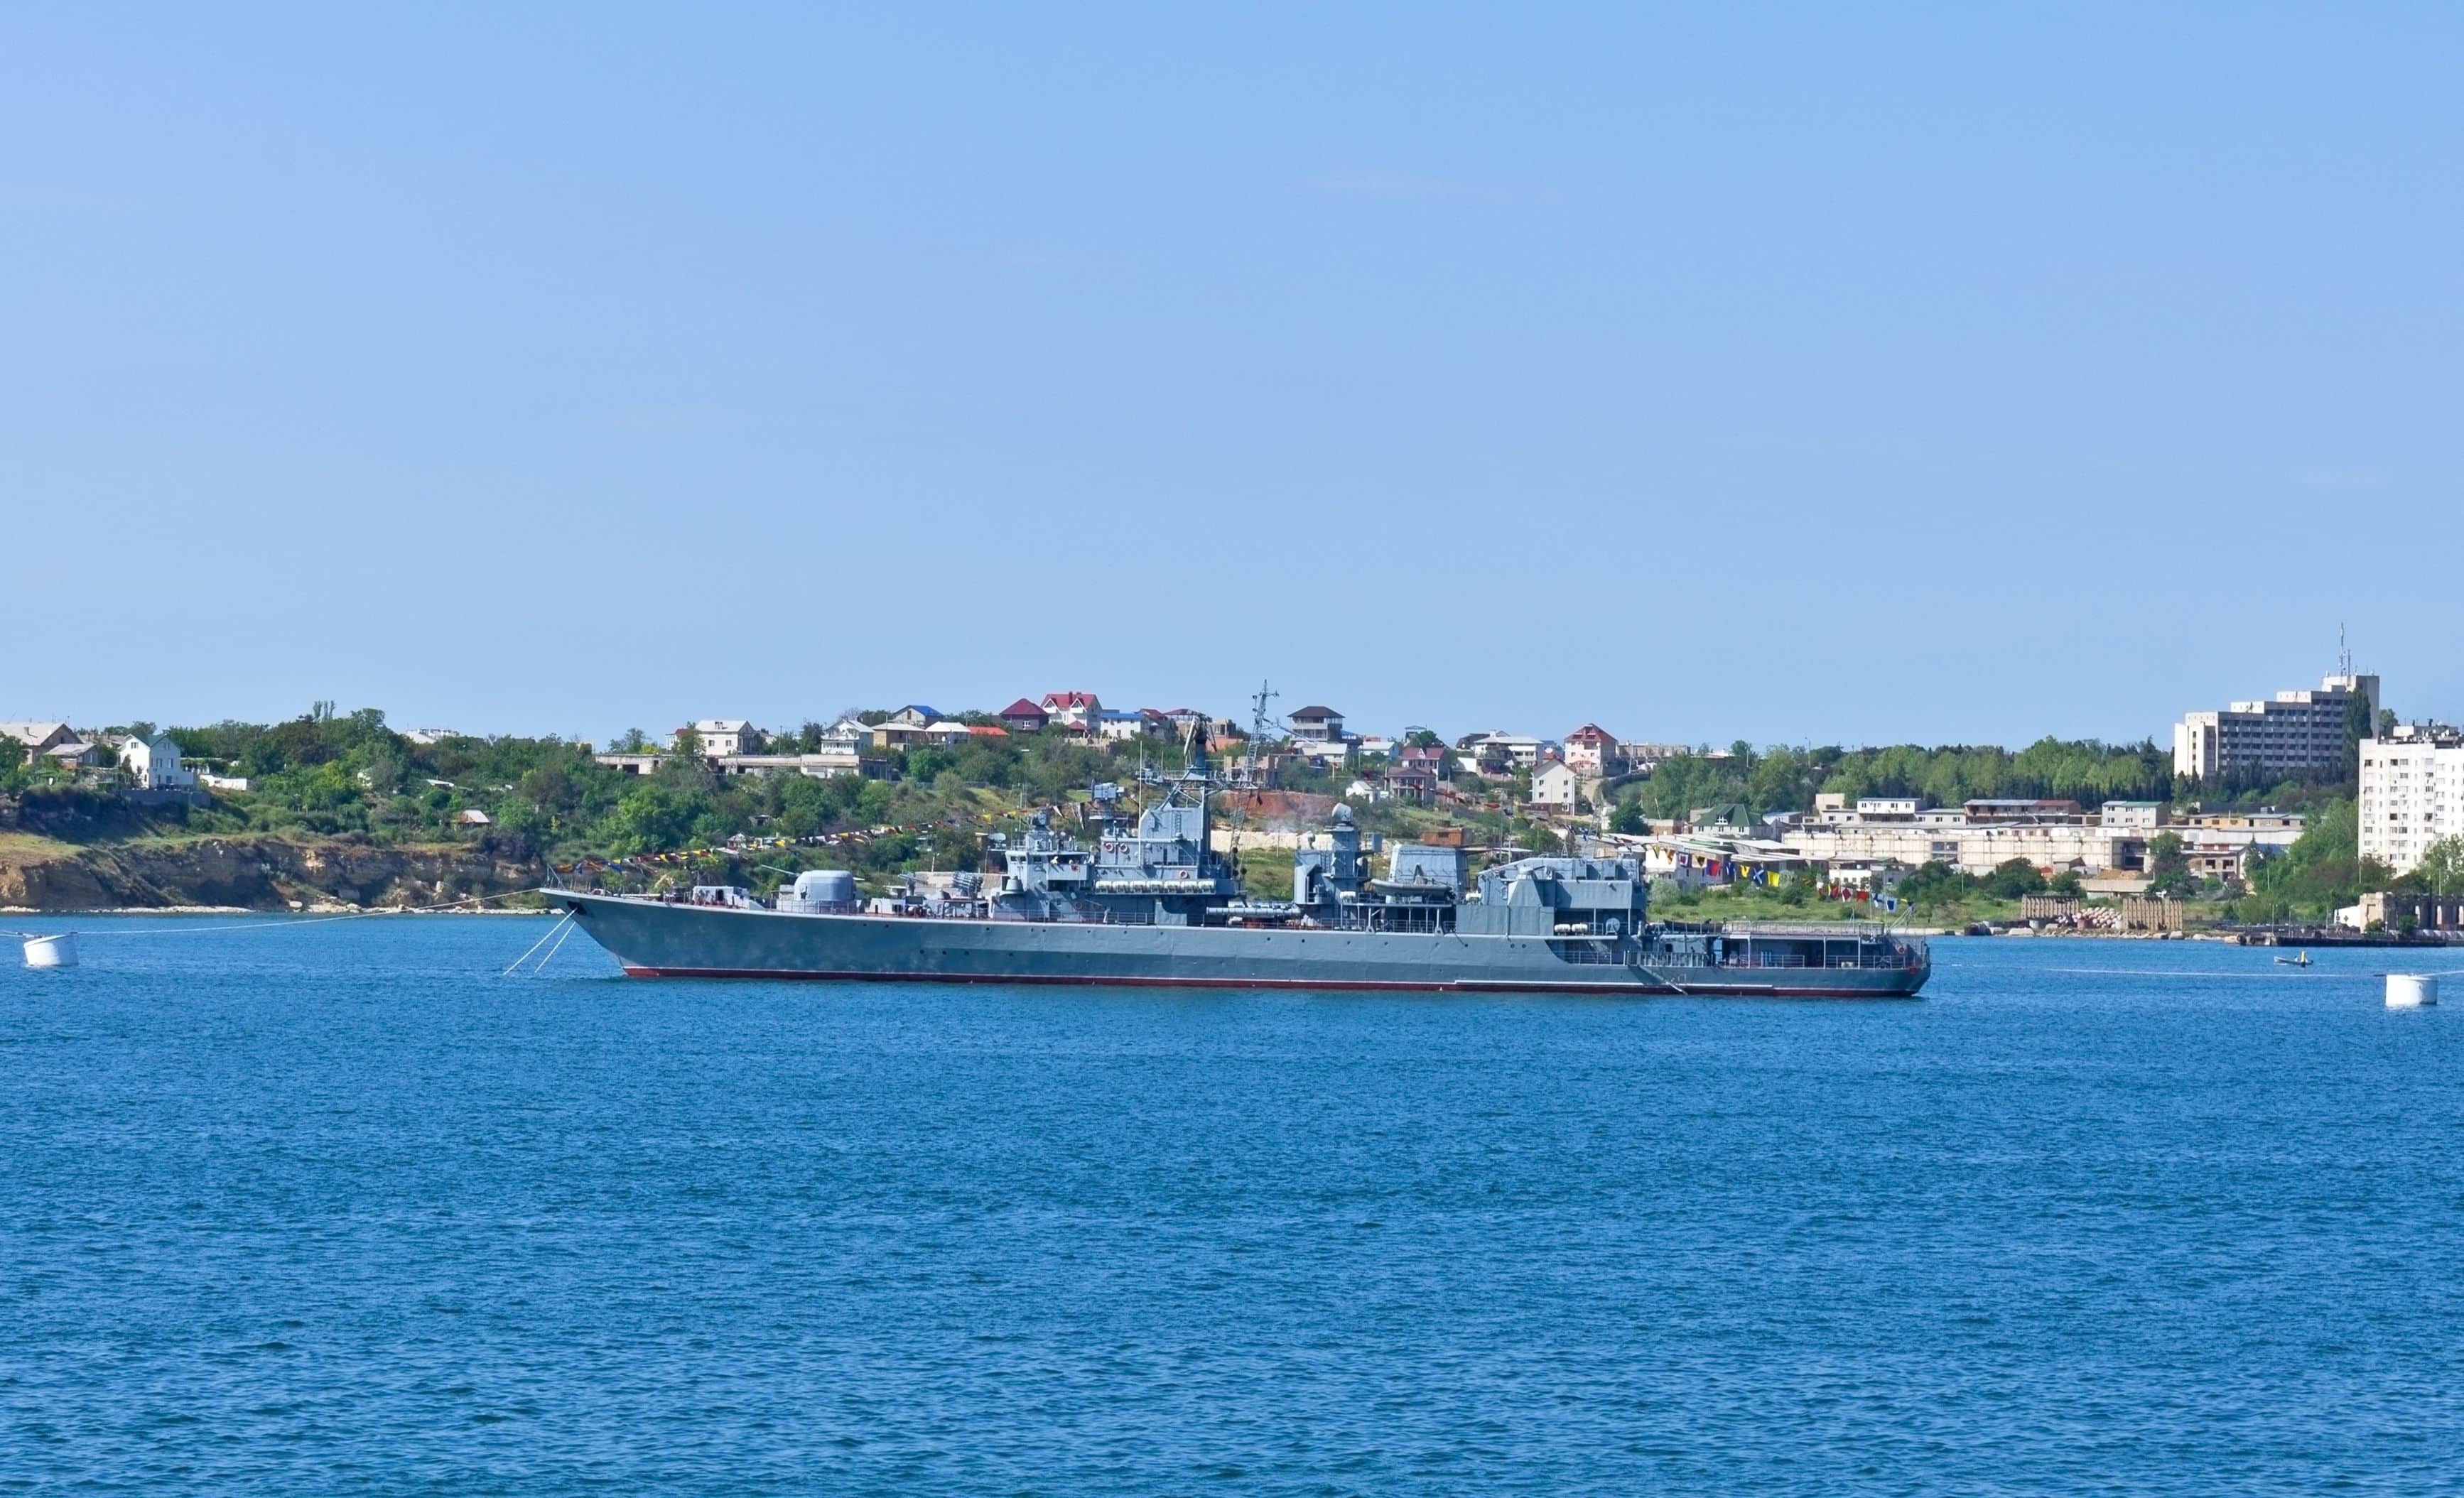 Russian warship in the Bay, Sevastopol, Crimea, Ukraine